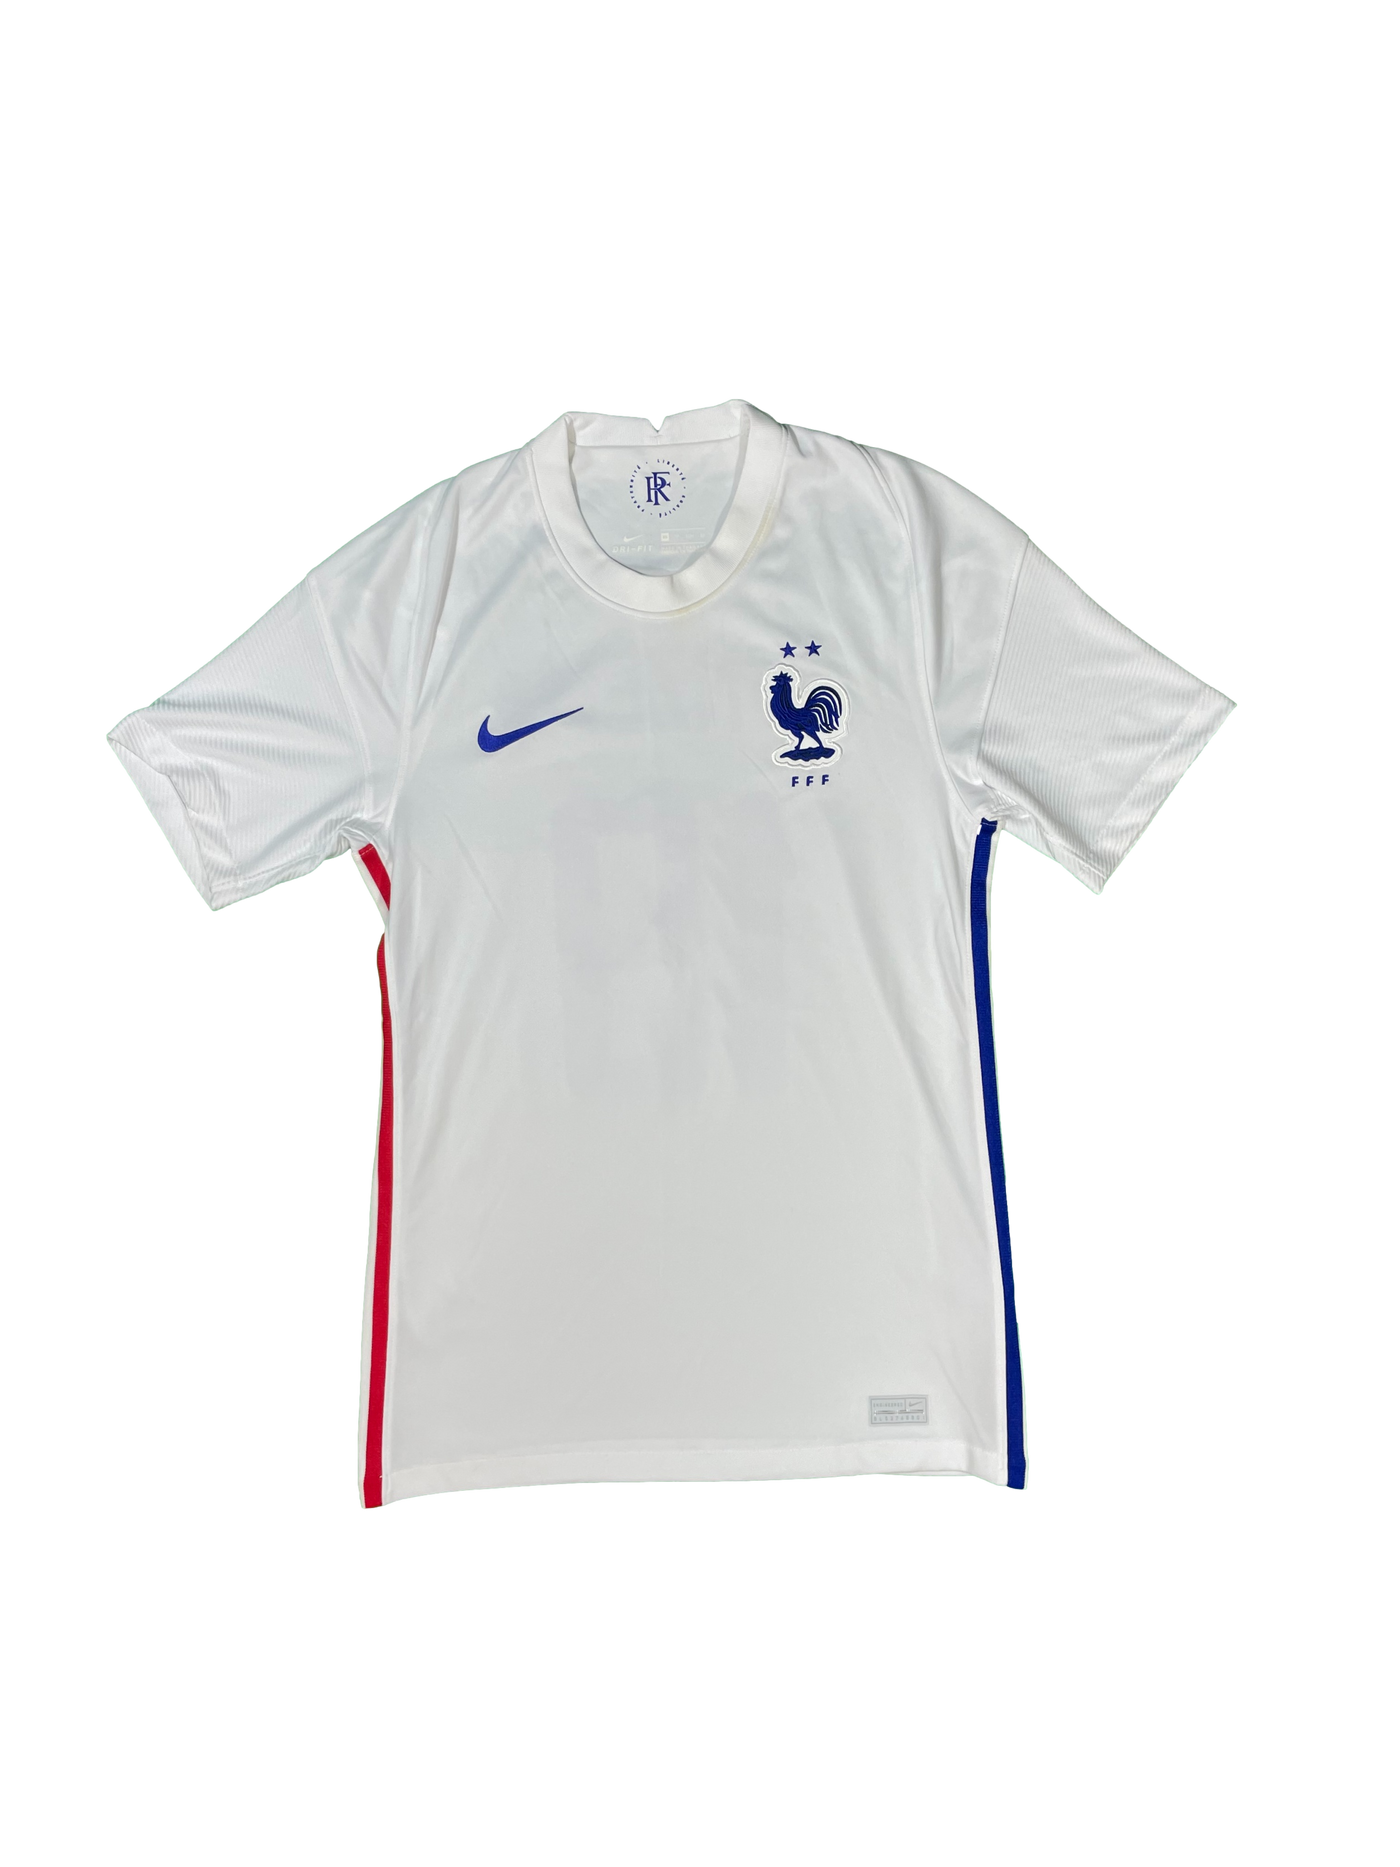 Maillot football vintage Equipe de France #19 Benzema saison 2020 - 2021 - Nike